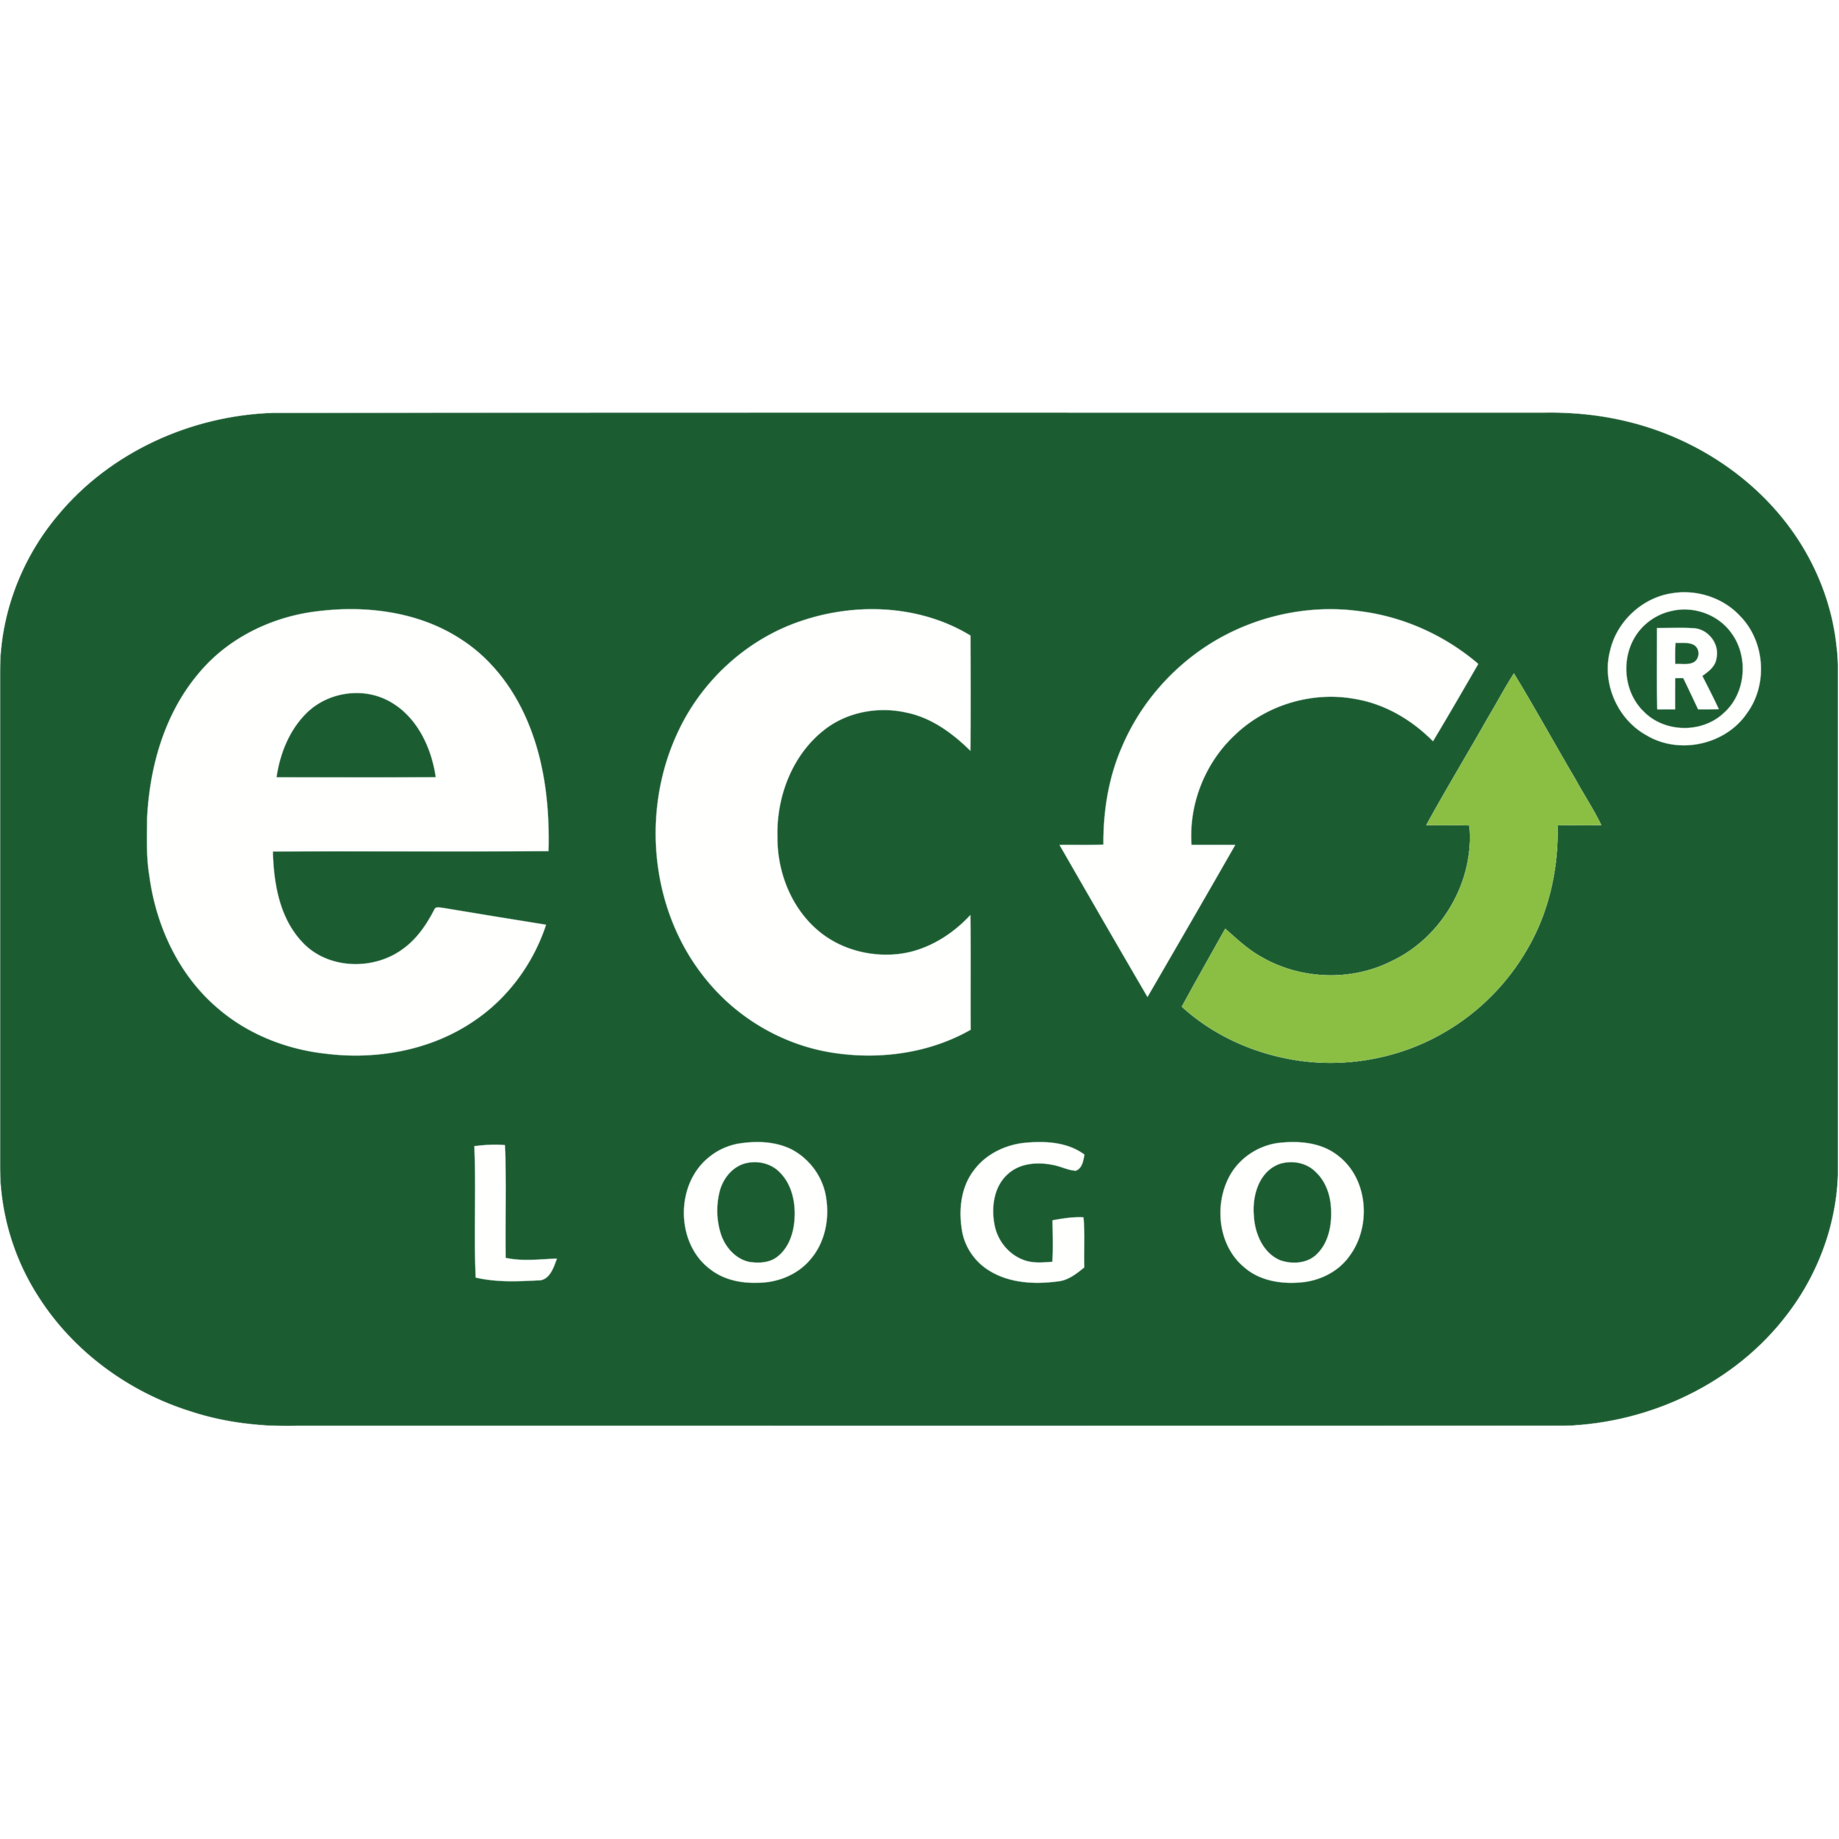 Easy Cut® Handabroller ecoLogo®